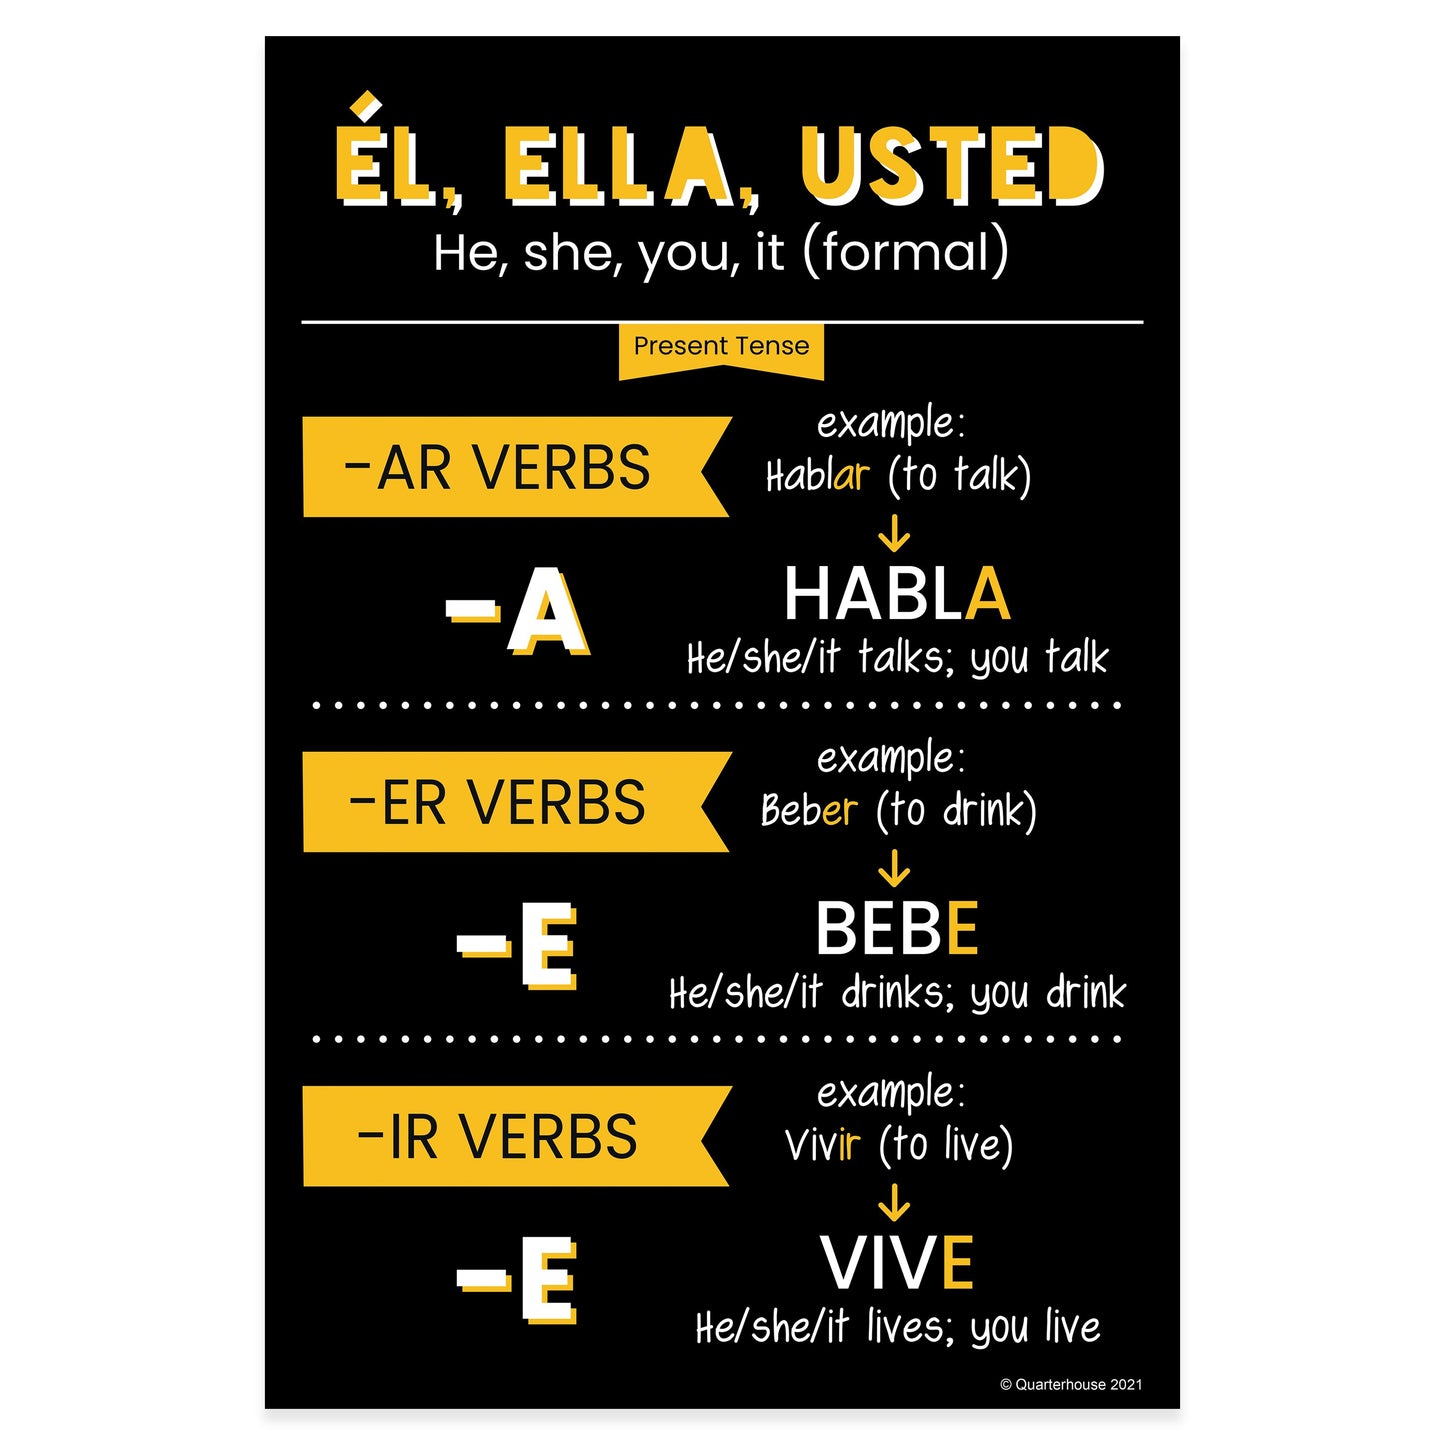 Quarterhouse Él, Ella, Usted - Present Tense Spanish Verb Conjugation (Dark-Themed) Poster, Spanish and ESL Classroom Materials for Teachers